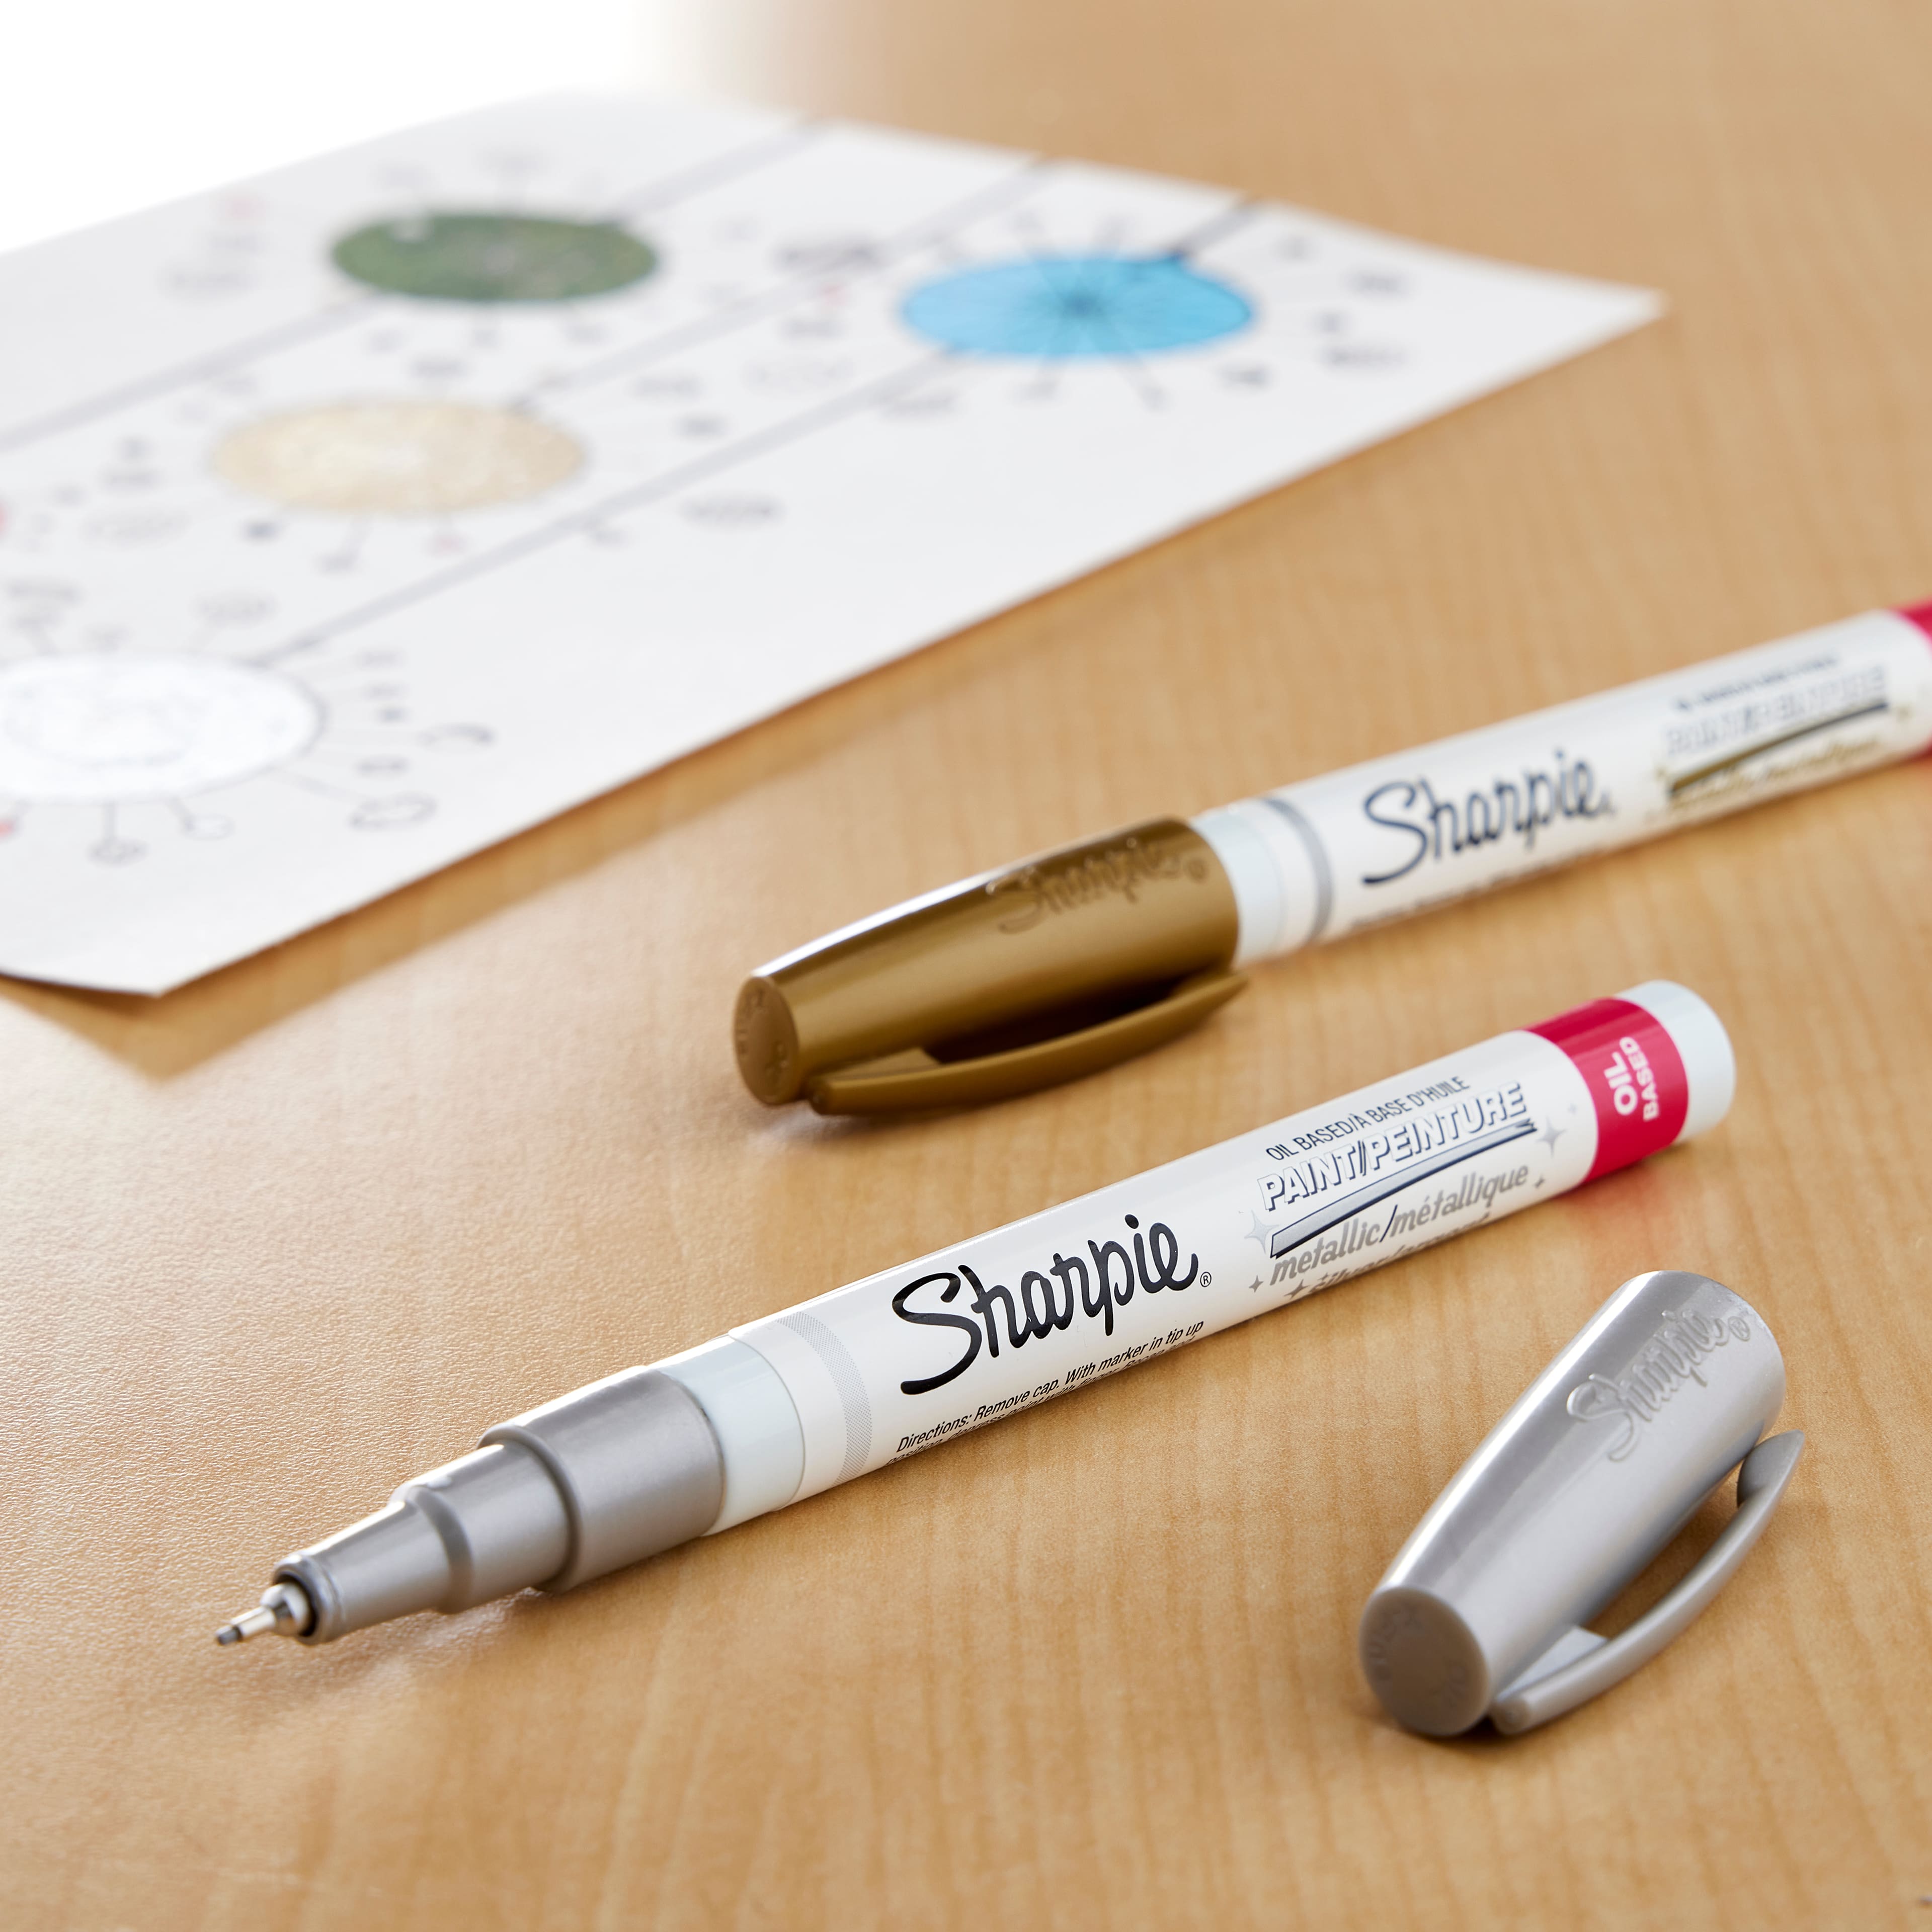 Sharpie® Oil-Based Paint Markers, Fine Point Metallic Set